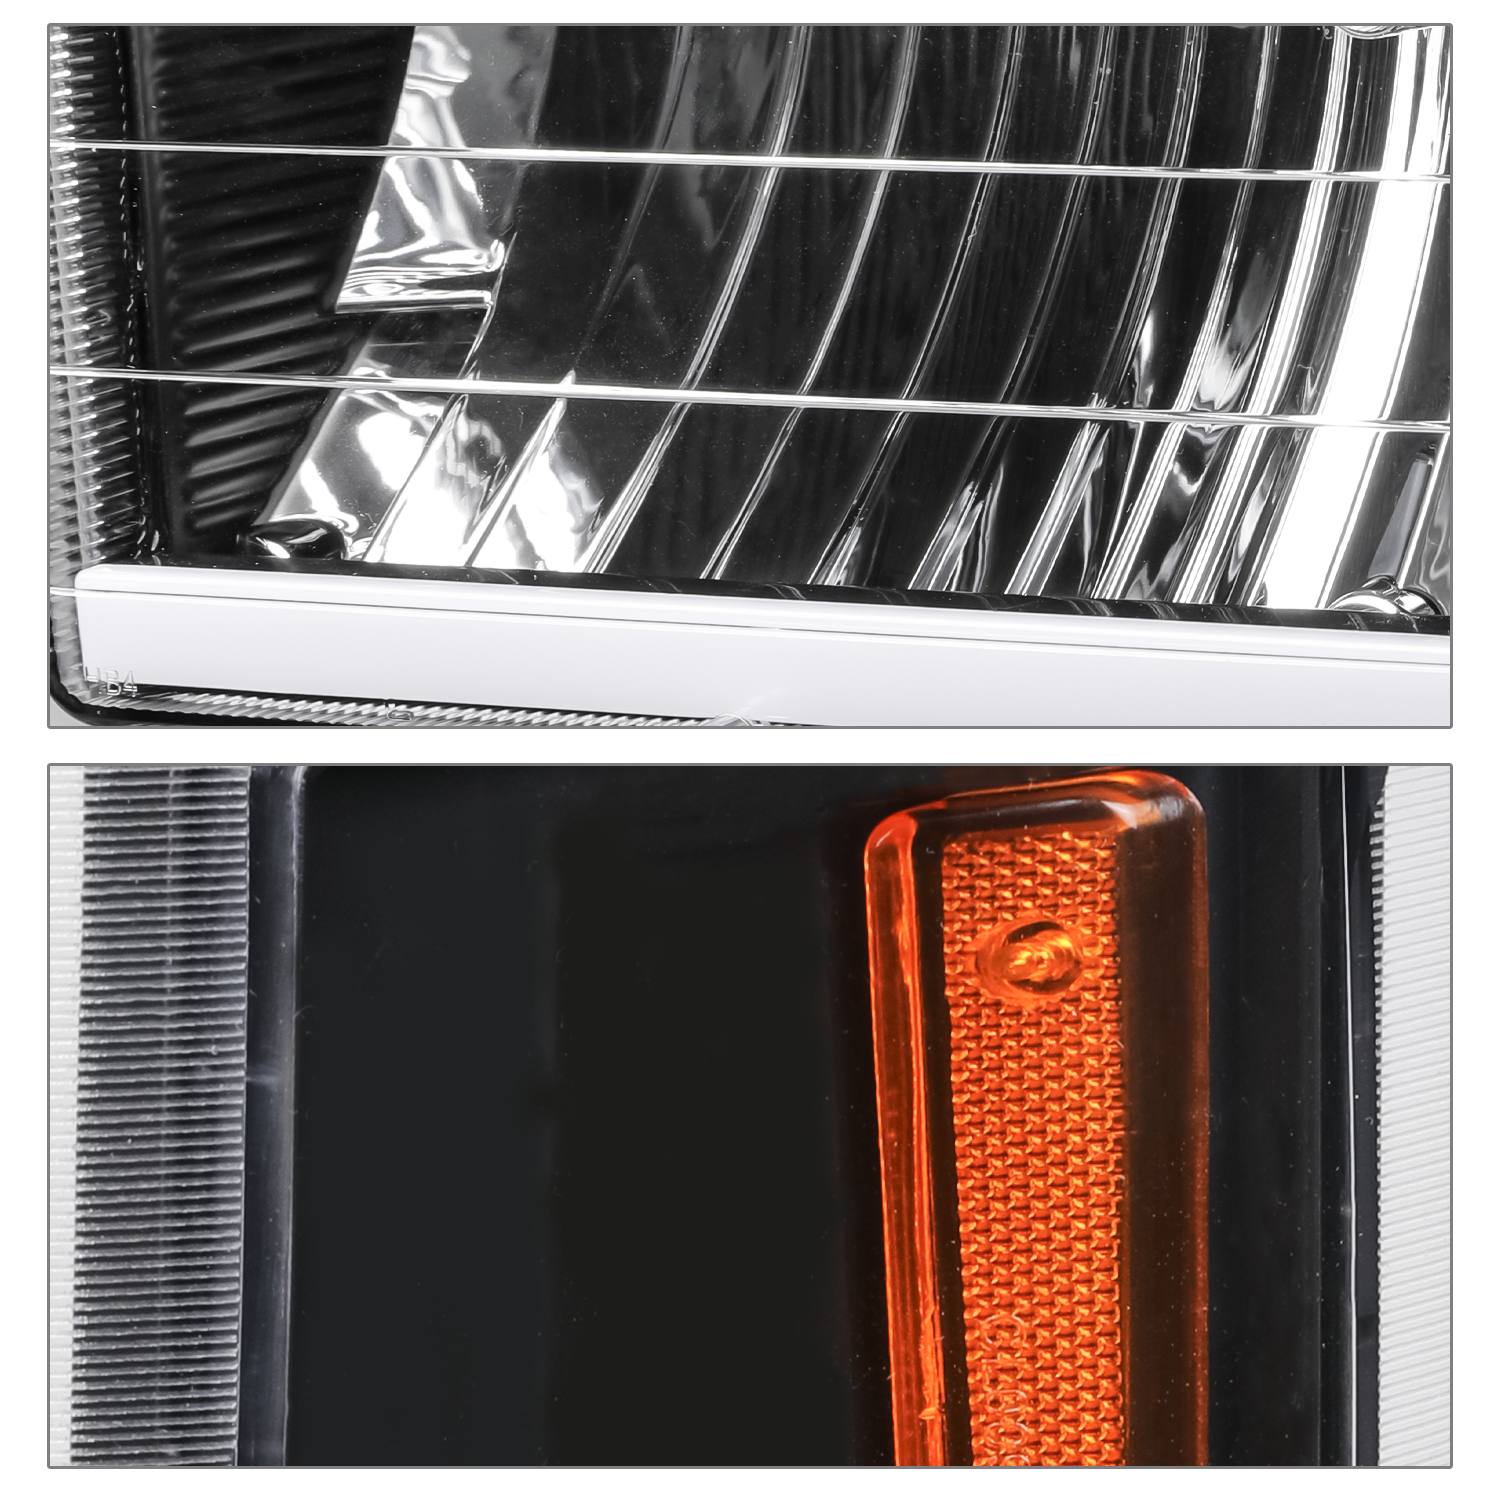 8pcs Headlights w/LED DRL Strip (Black)<br>94-00 Chevy C/K C10 Pickup, Suburban